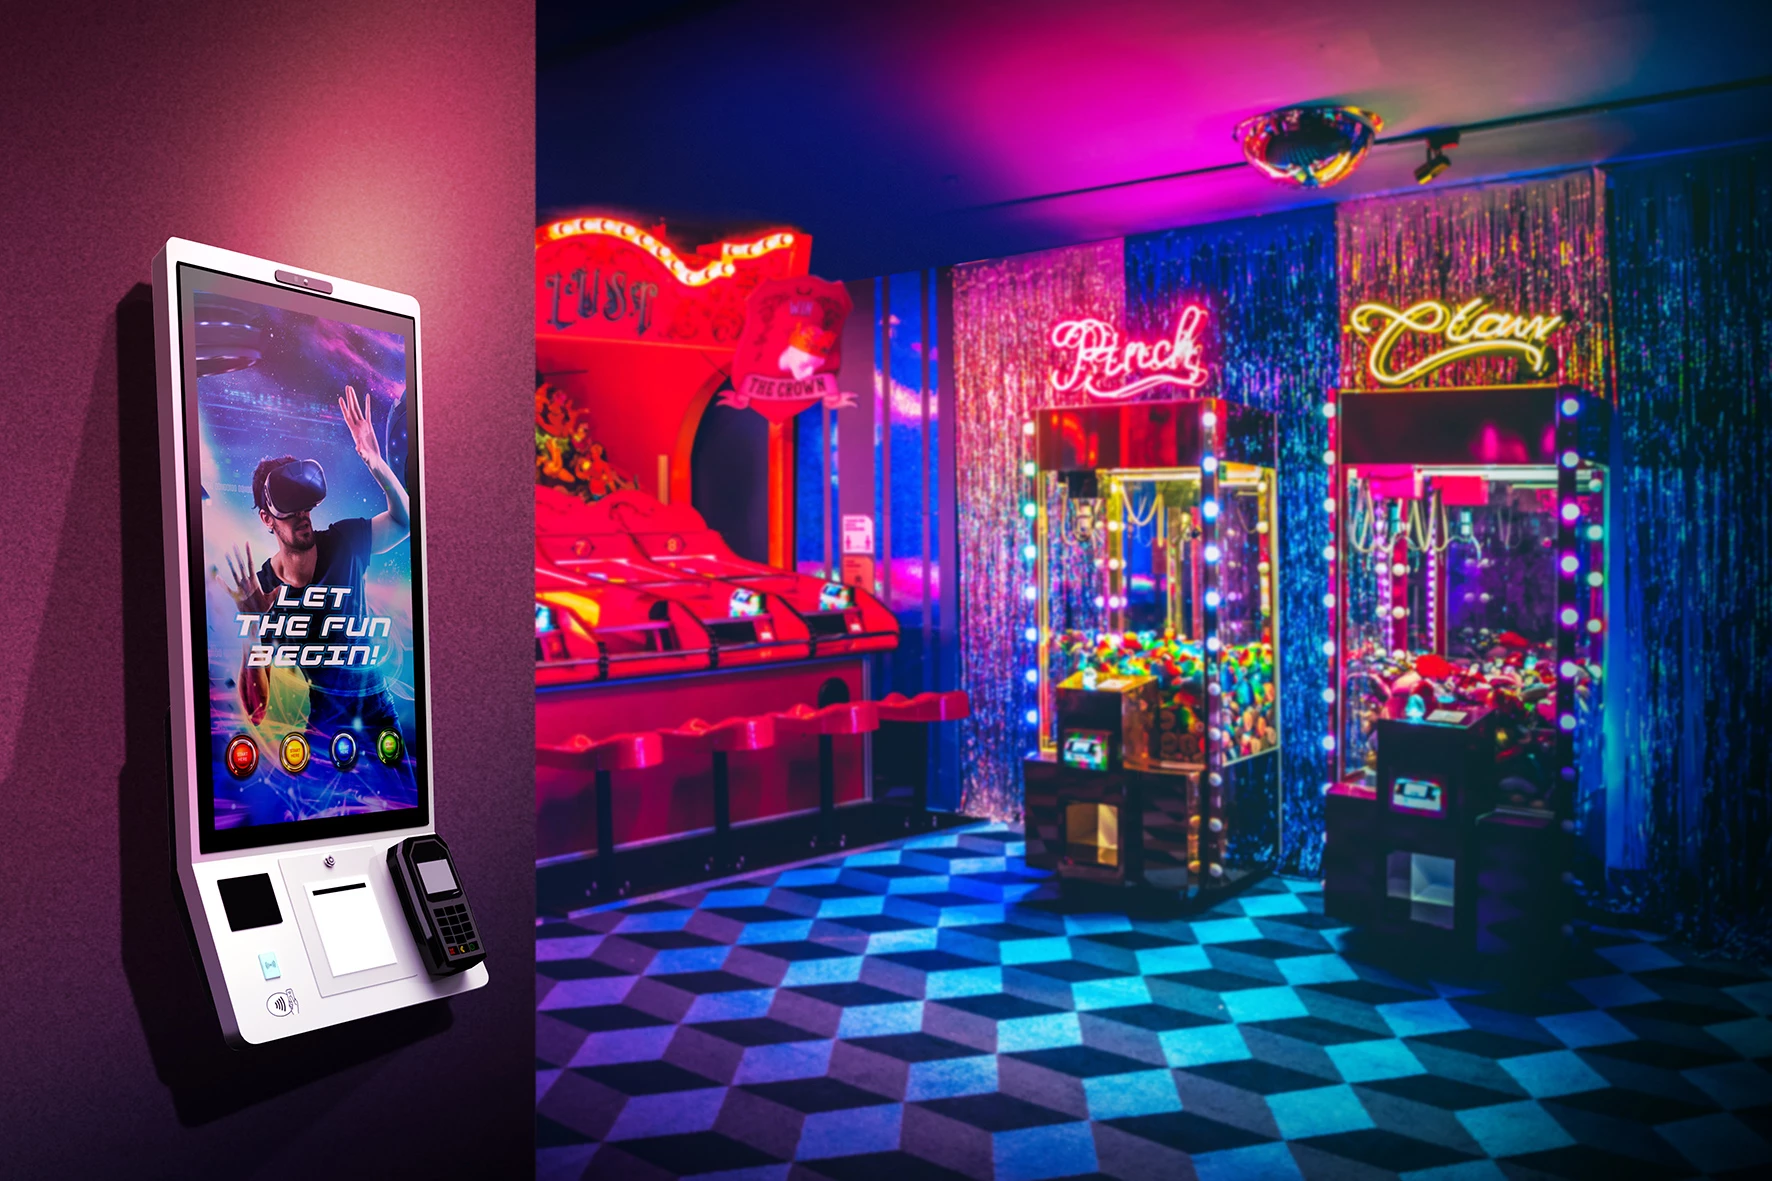 Digital mockup of Embed's Cashless Hardware, Kiosk+ in an arcade